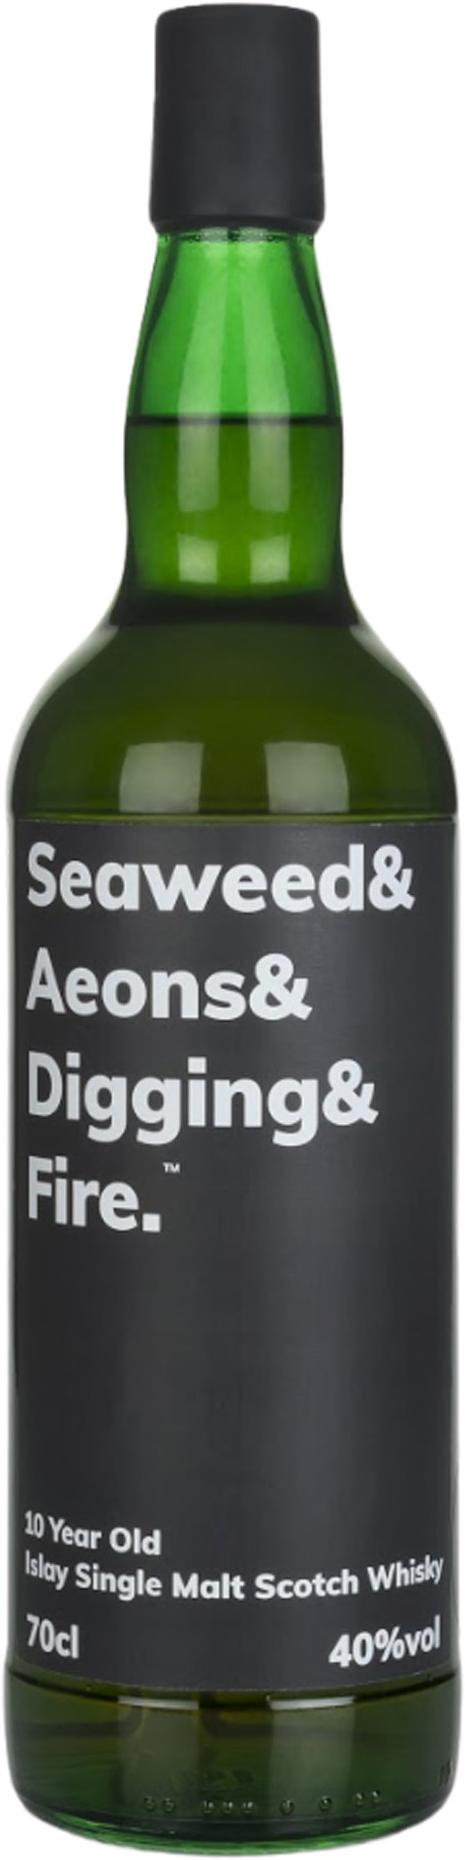 Seaweed & Aeons & Digging & Fire 10 Year Old Single Malt Scotch Whisky 700ml